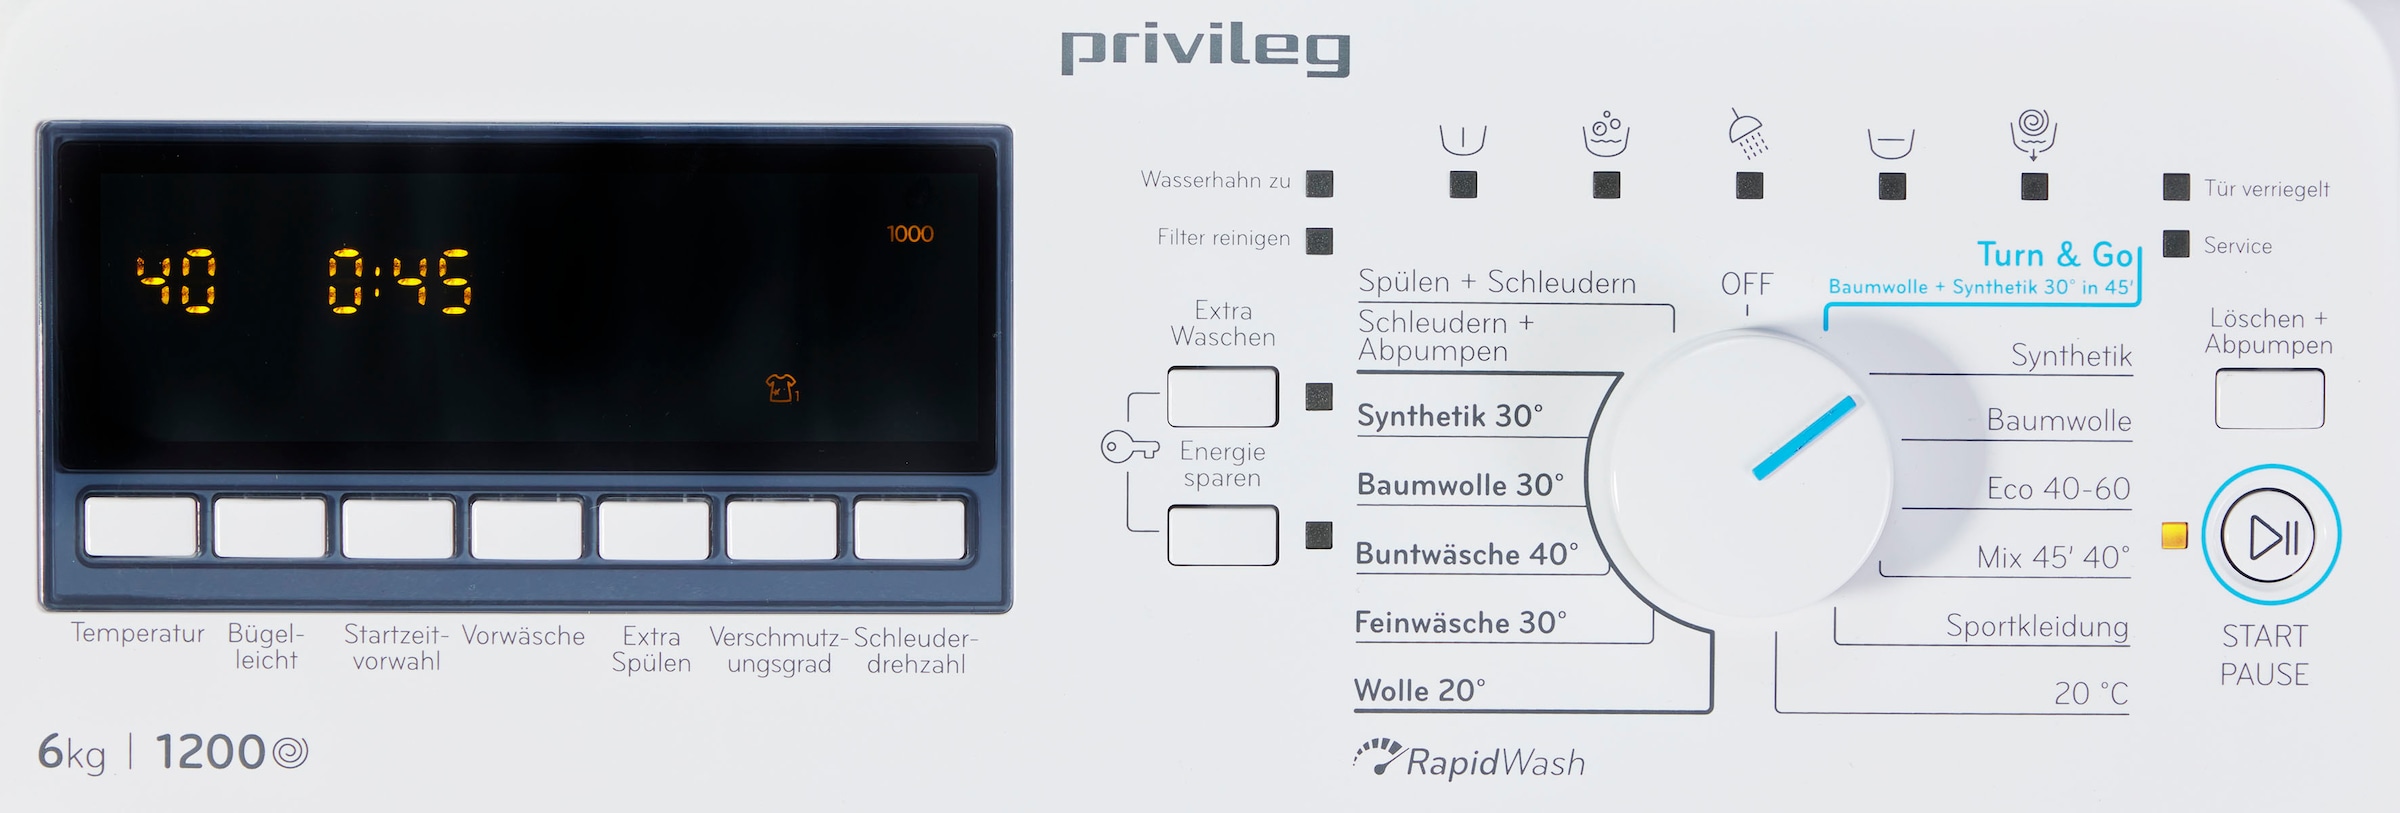 Privileg Waschmaschine Toplader »PWT Class Class Raten S5 U/min N«, auf PWT N, 1200 6 S5 B6 kg, BAUR B6 